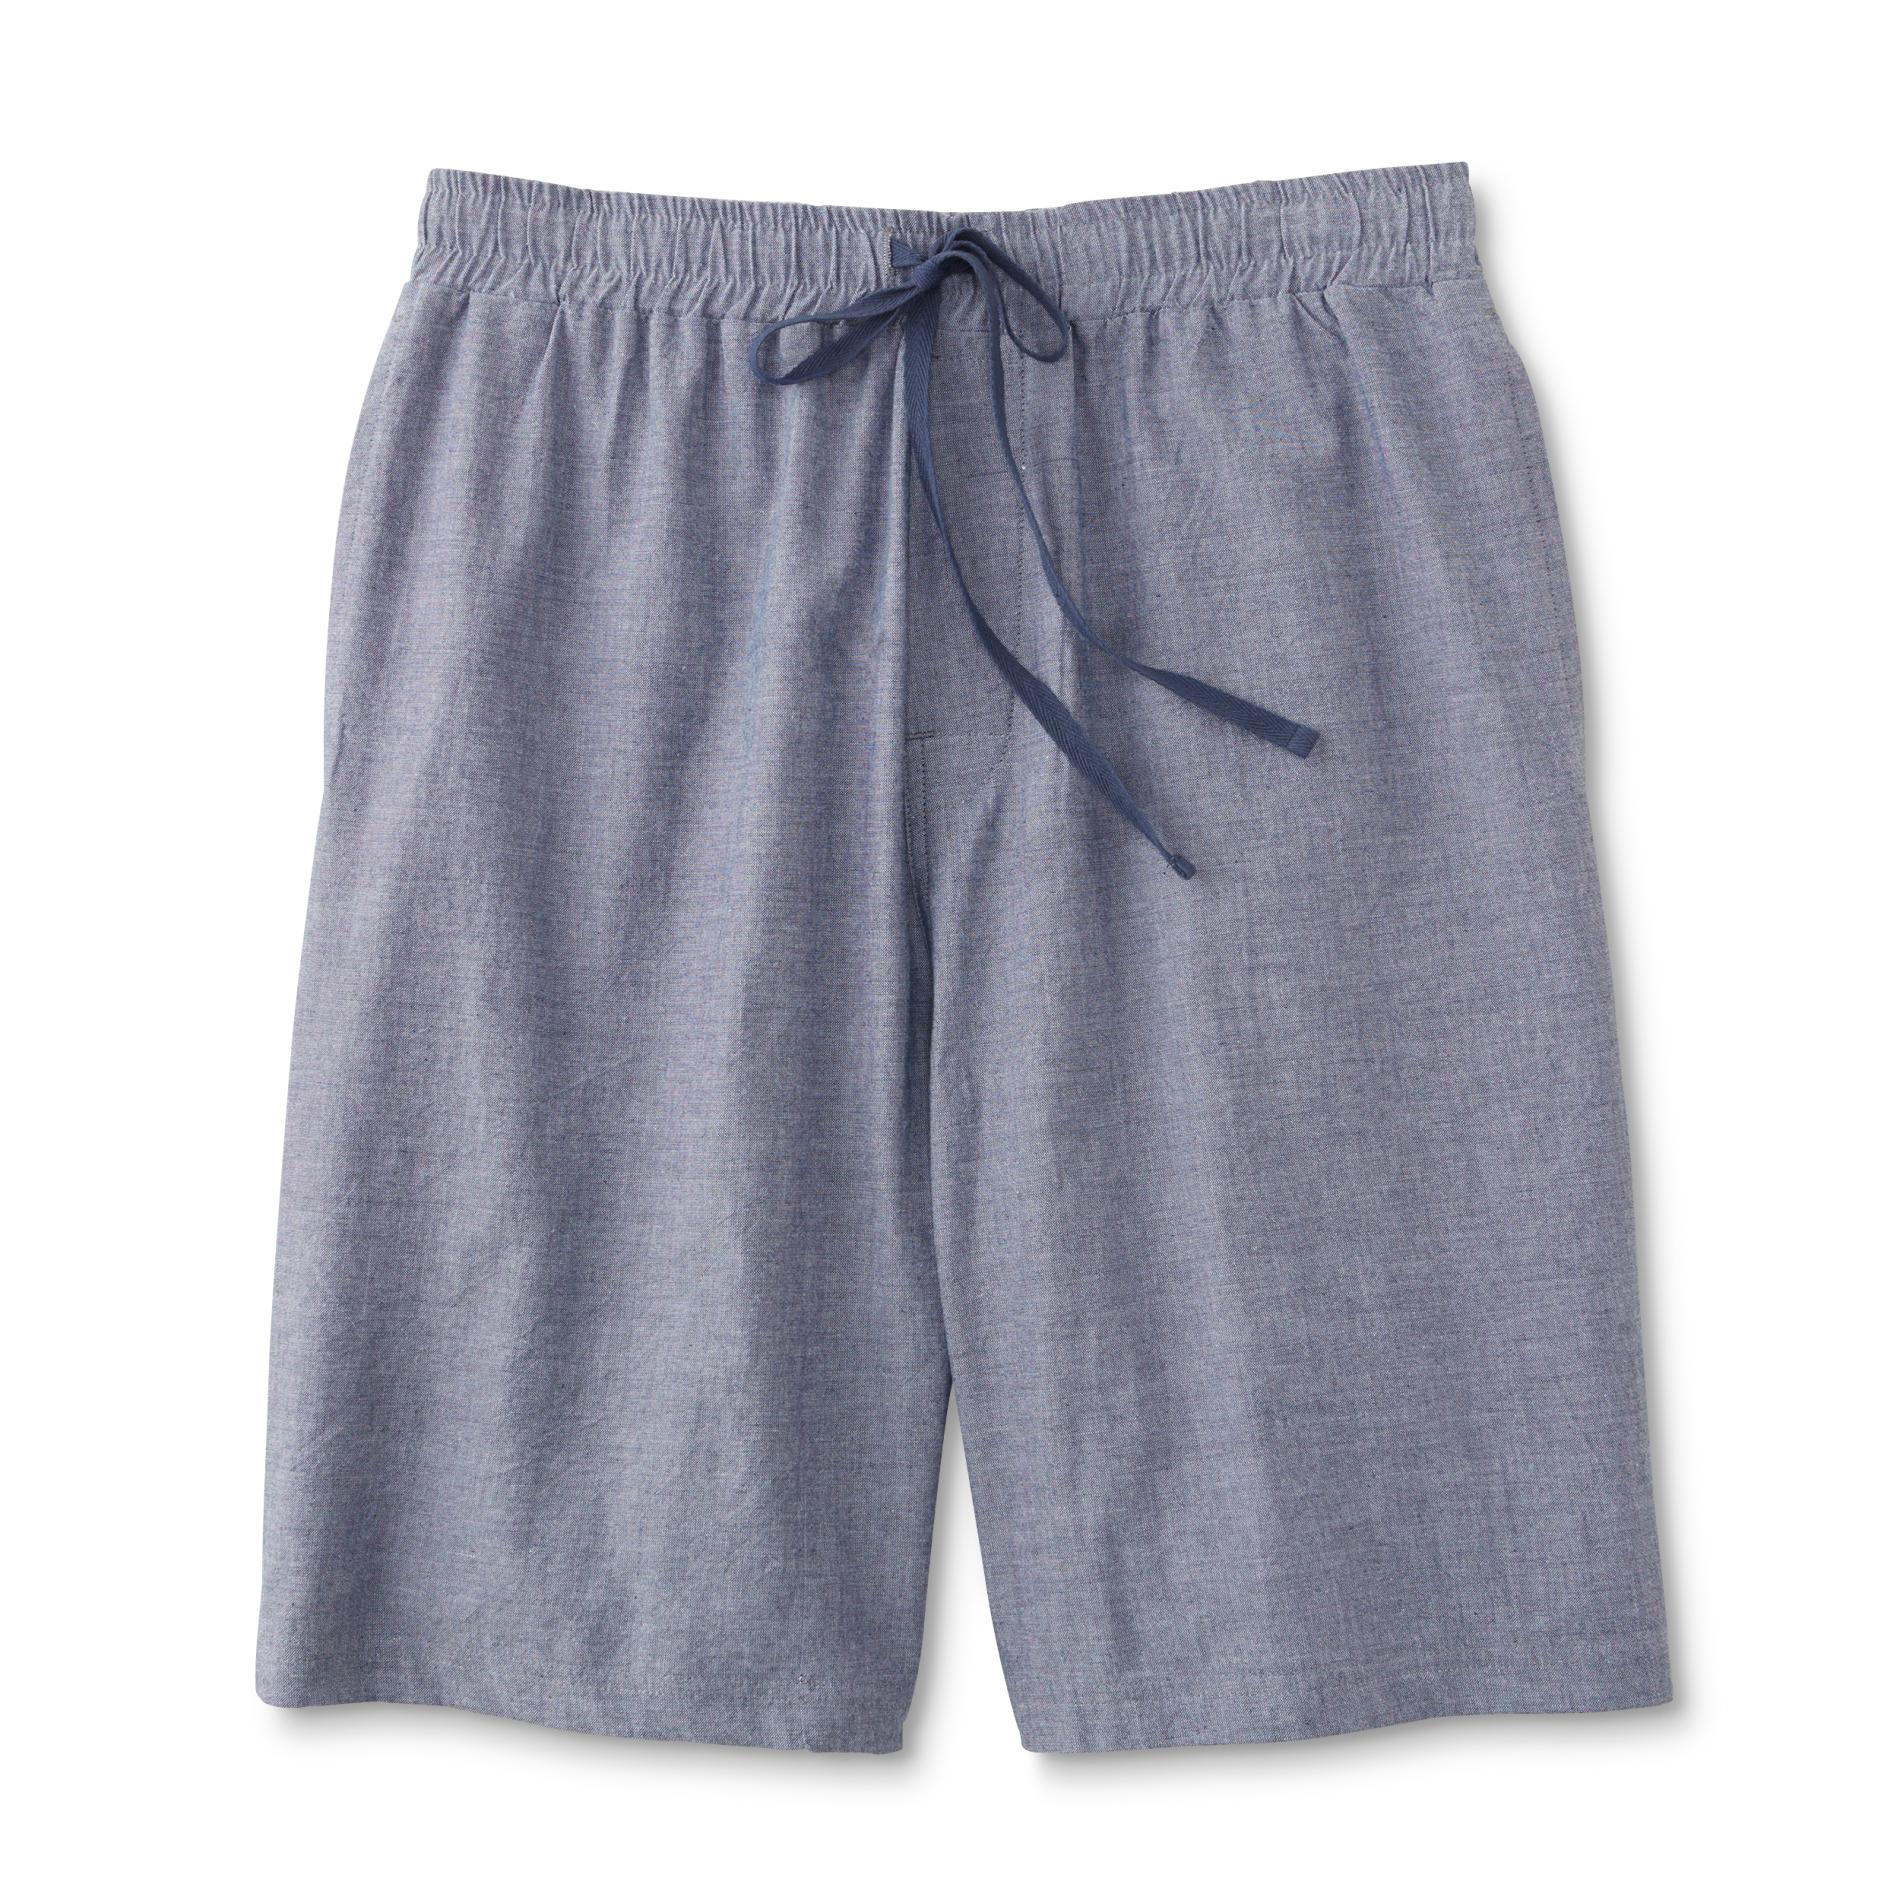 Joe Boxer Men's Pajama Shorts